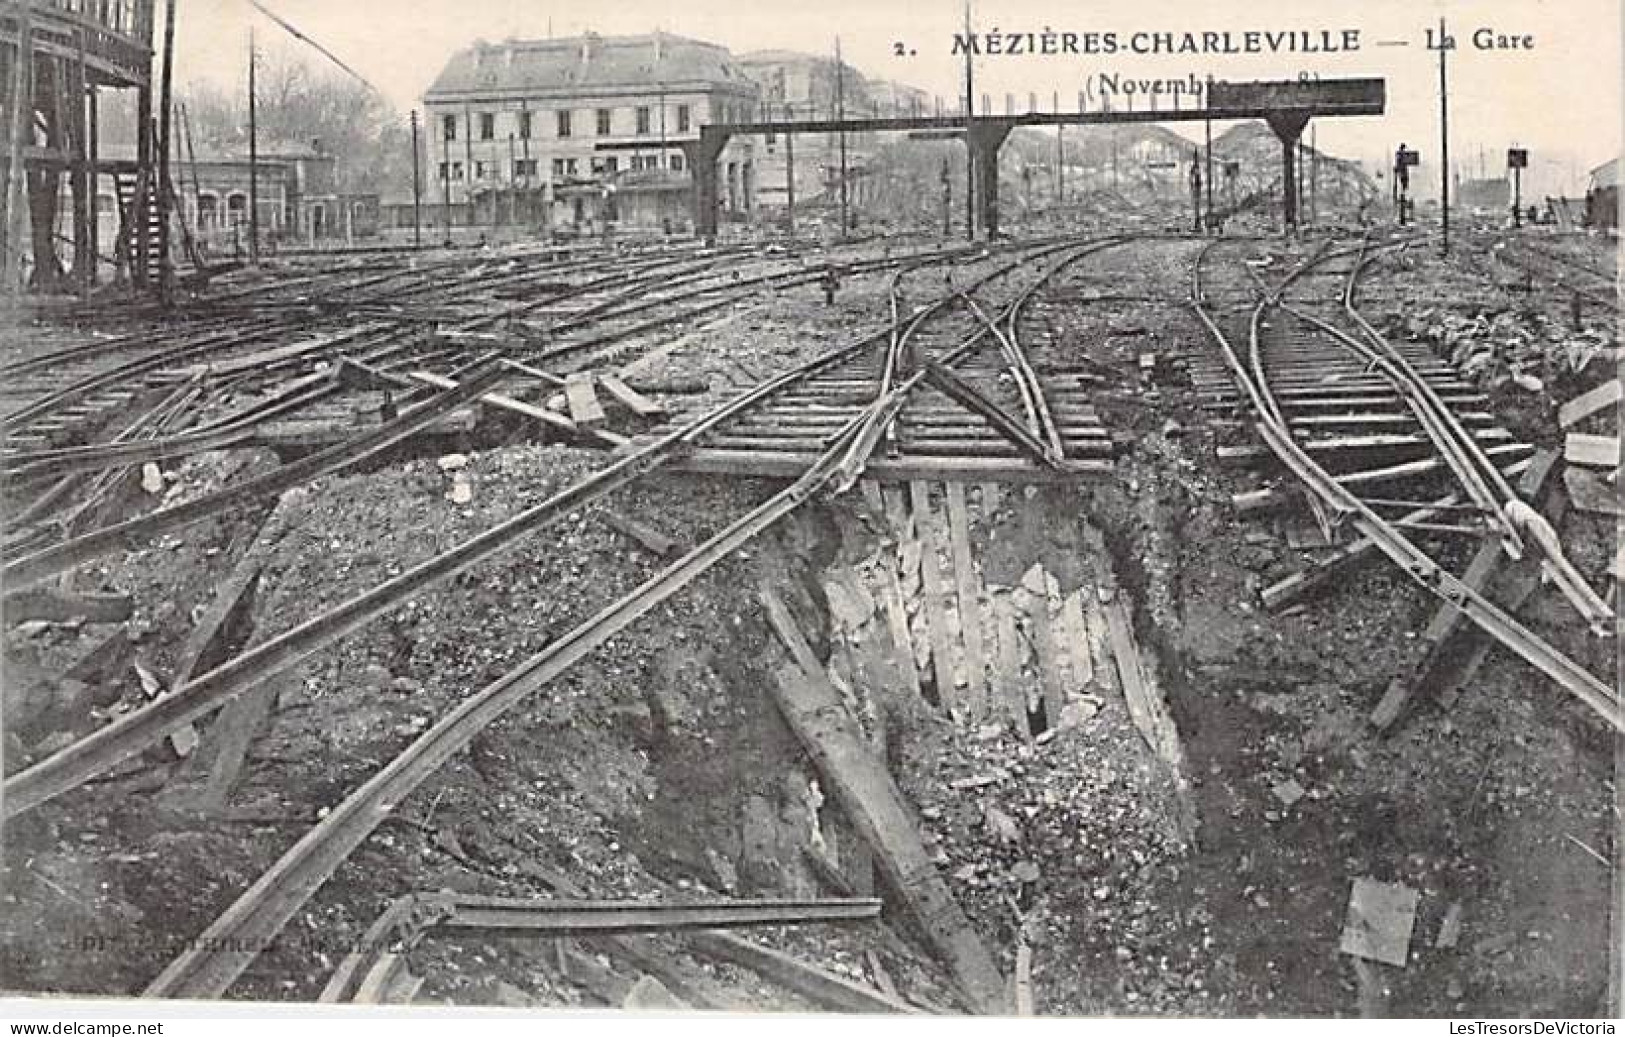 France - Mézières Charleville - La Gare - Novembre 1918 -  Carte Postale Ancienne - Charleville